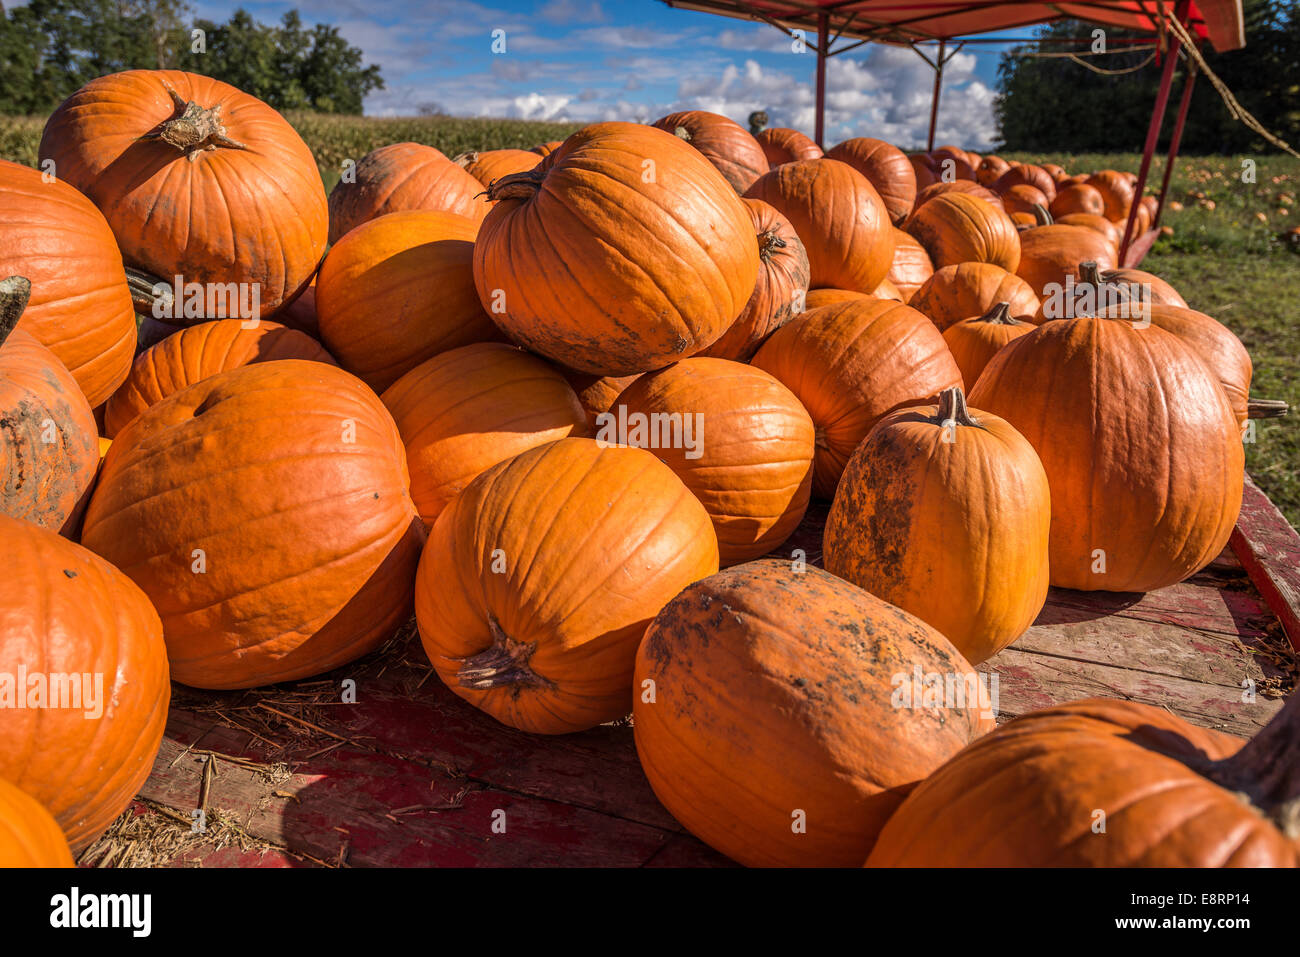 Sunlit pumpkins on a cart in a farmers field. Stock Photo